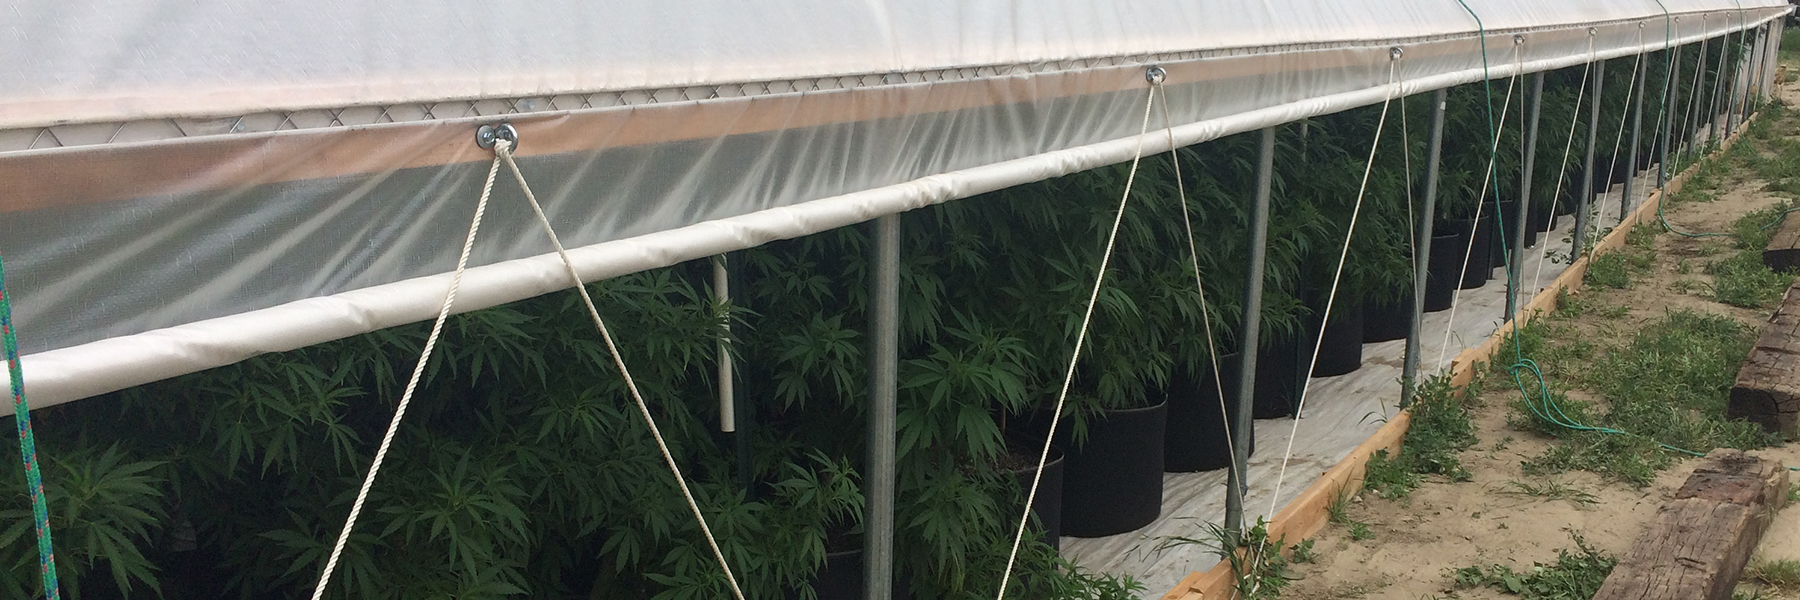 marijuana hoop house greenhouse